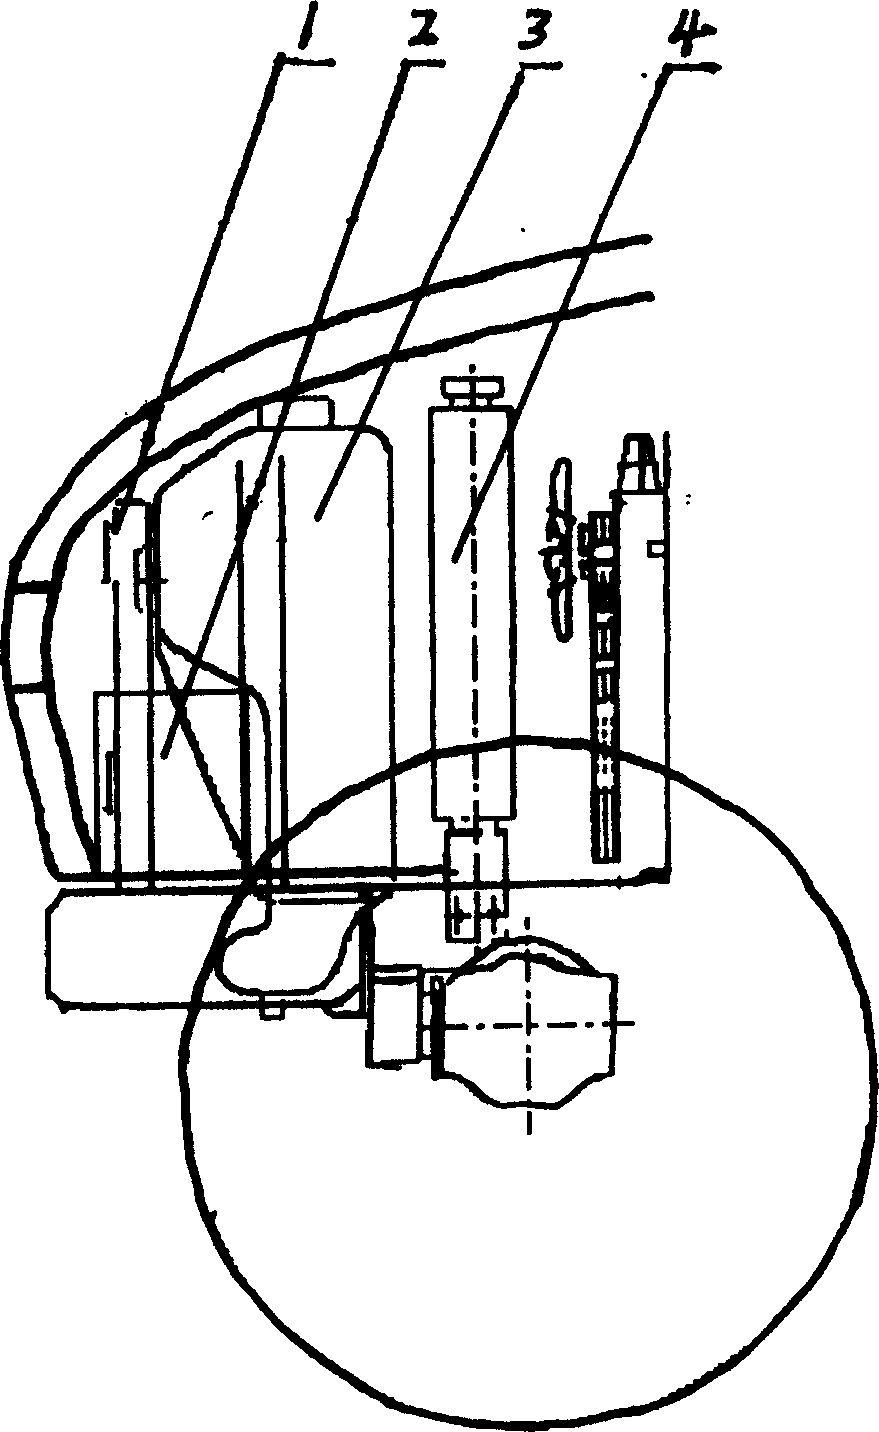 Fuel case and accumulator assembling arrangement of tractor